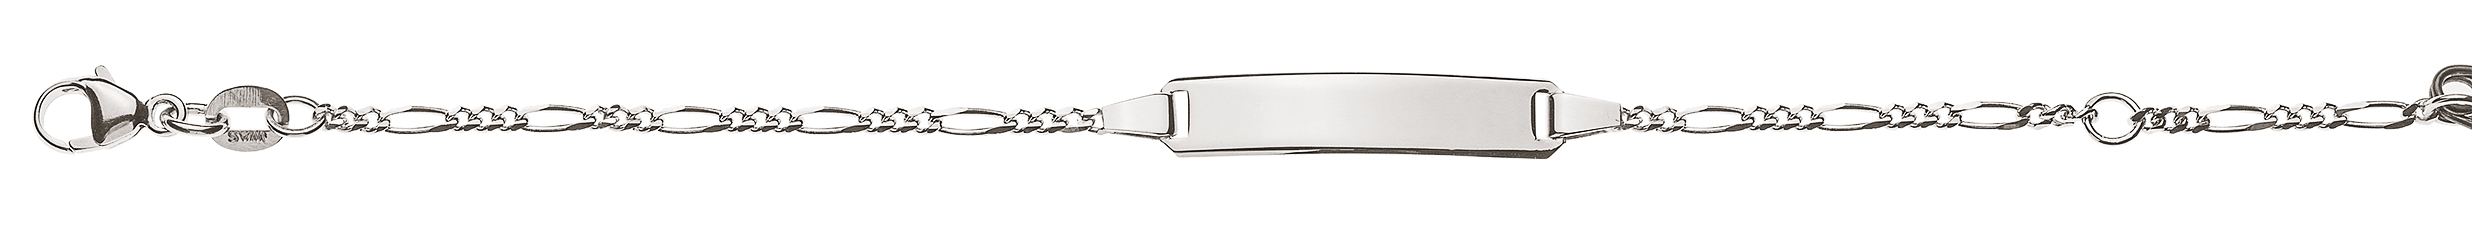 AURONOS Style ID-Bracelet en or blanc 9k Chaîne Figaro 16cm